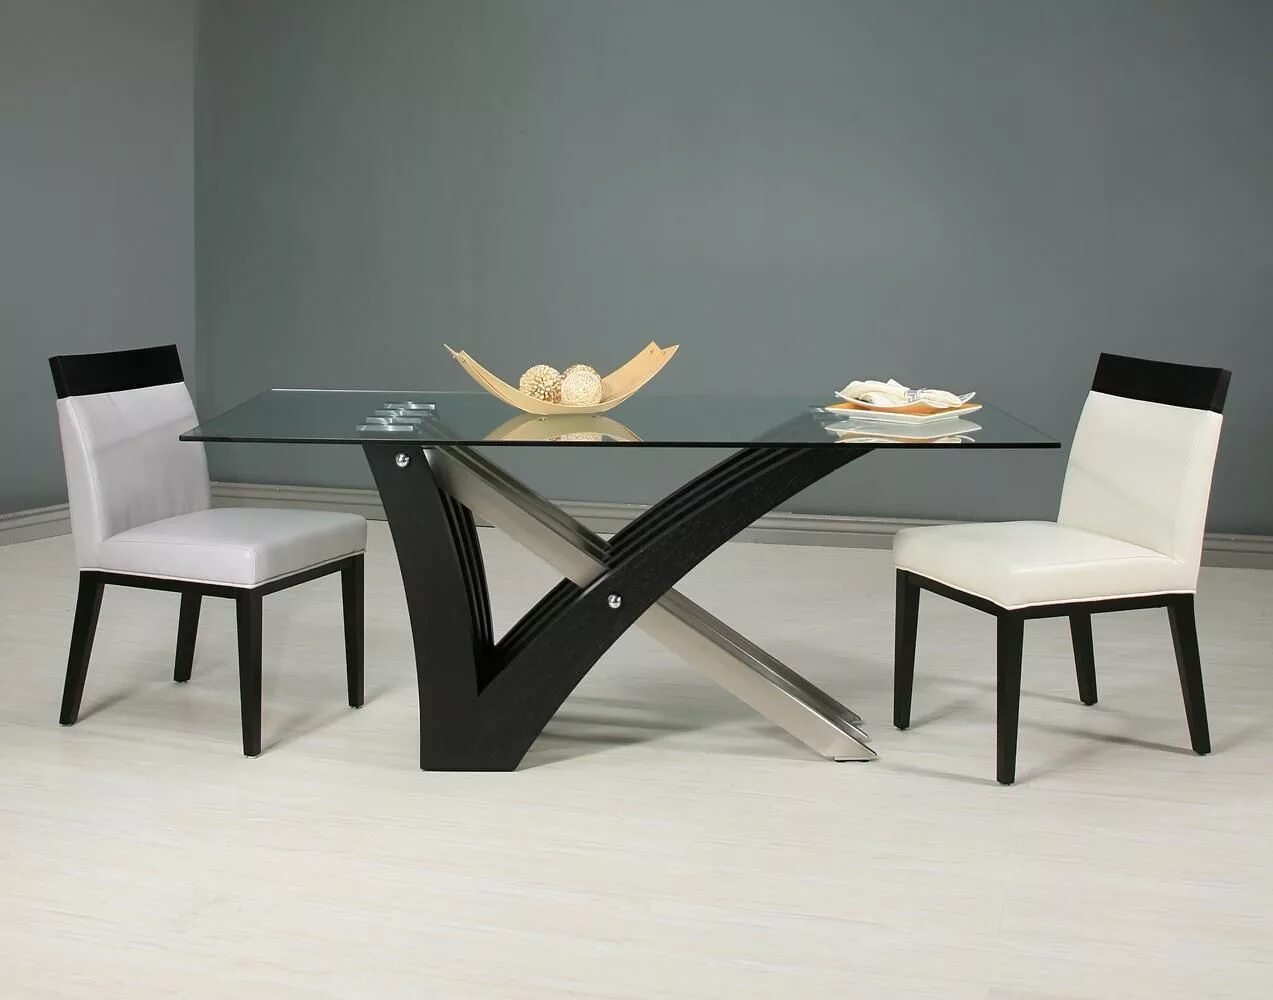 Стул Mebwill Модерн. Дизайнерский обеденный стол. Обеденный стол необычной формы. Дизайнерские столы для кухни. Обеденные столы 60 60